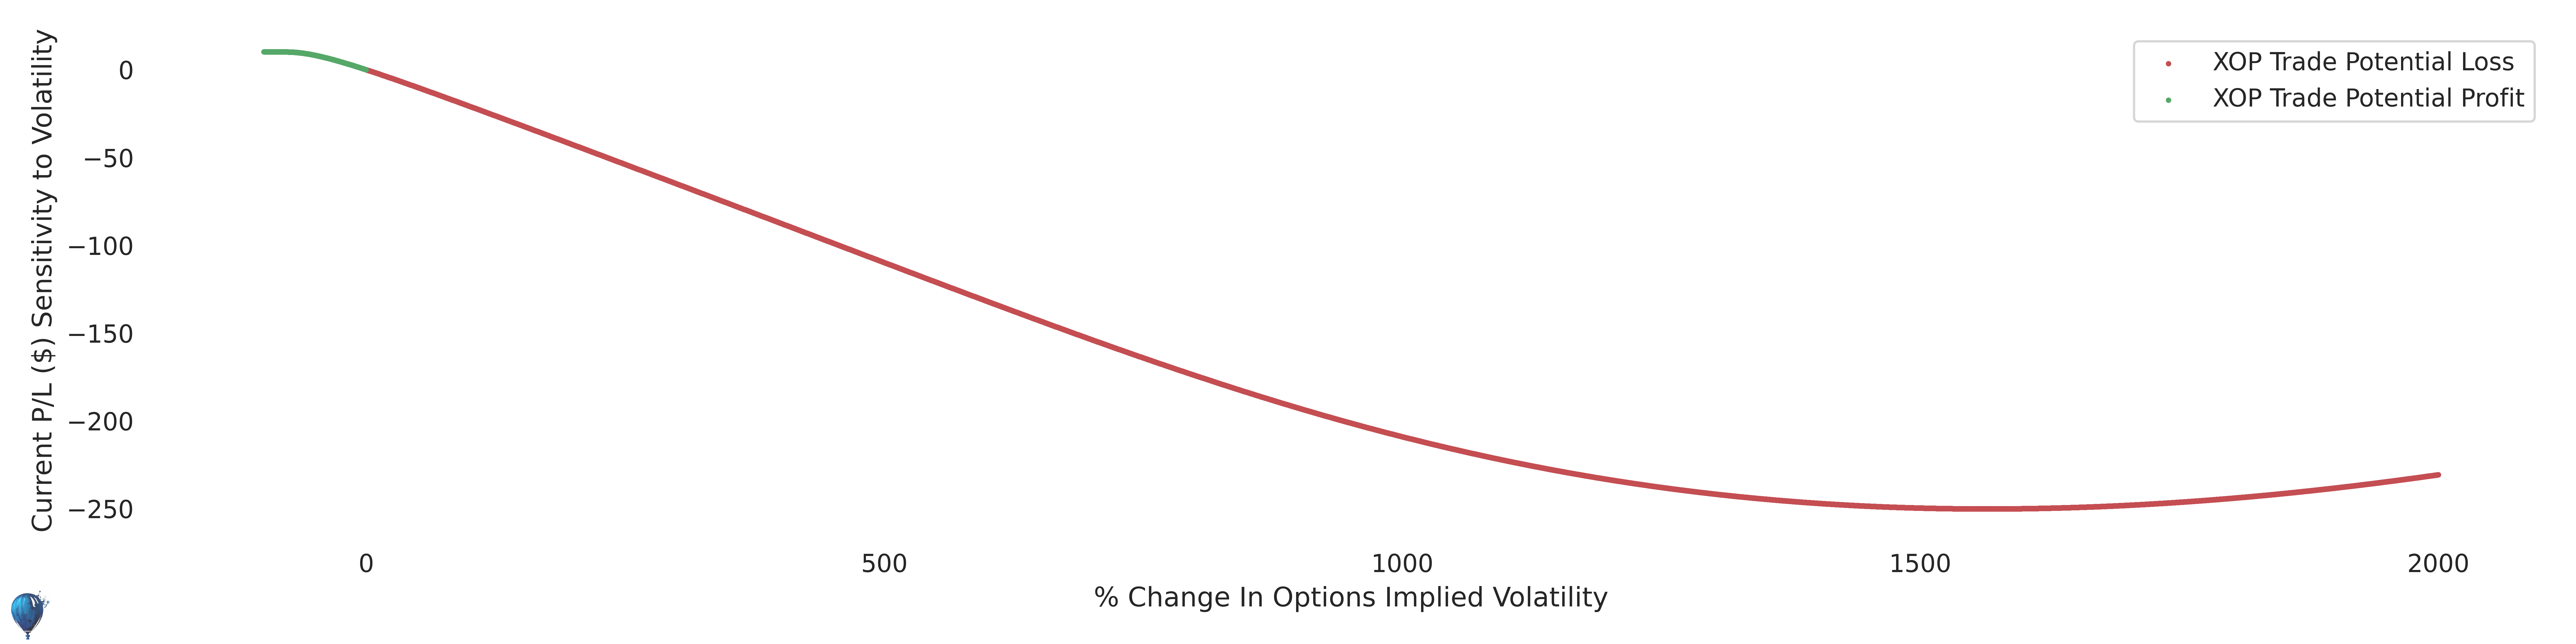 XOP trade sensitivity to volatility